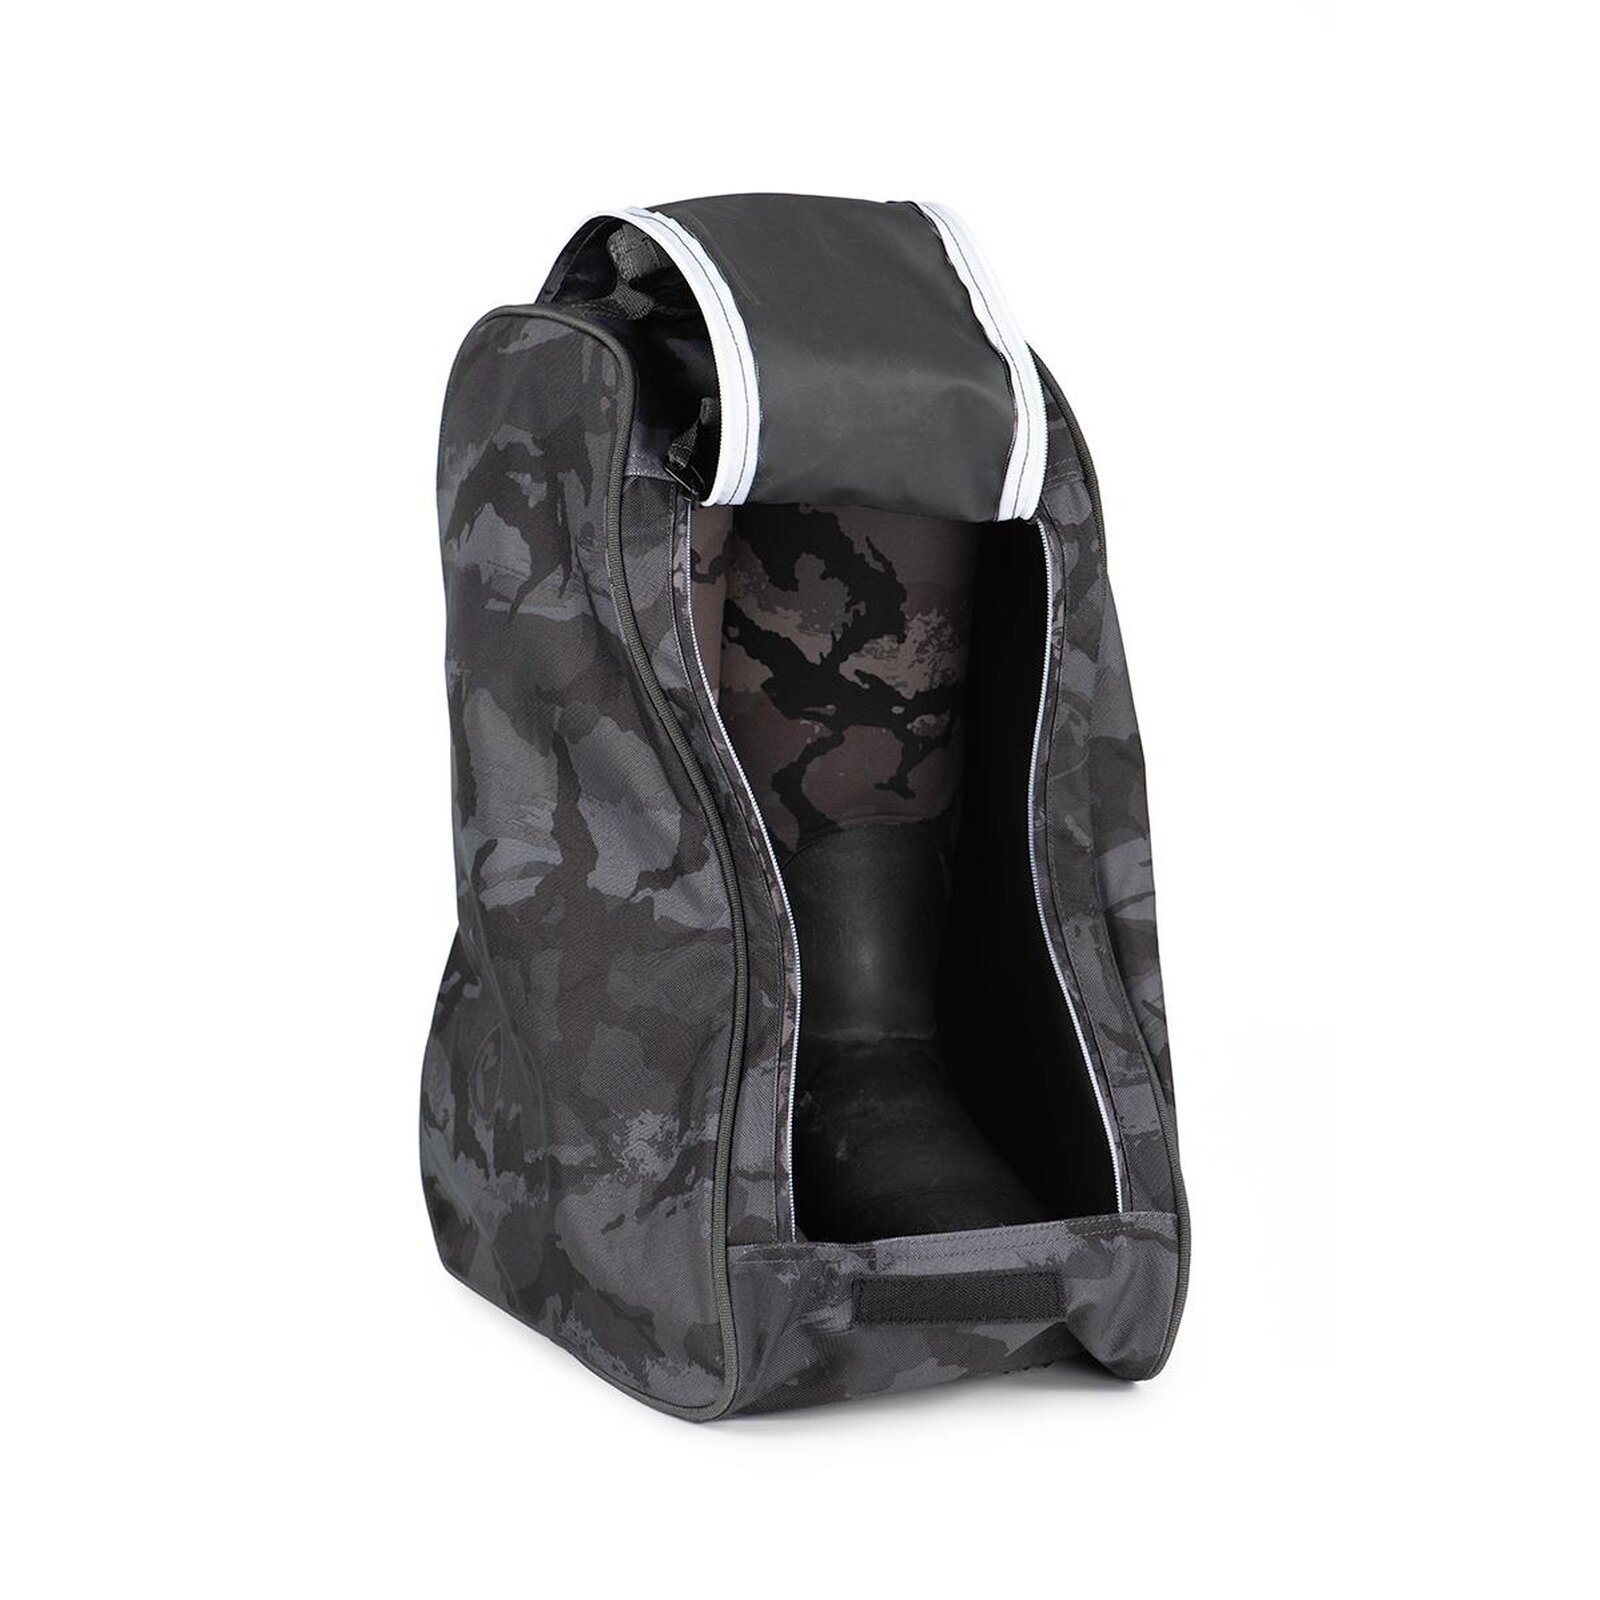 Fox Rage Voyager® Camo Wader & Boot Bag